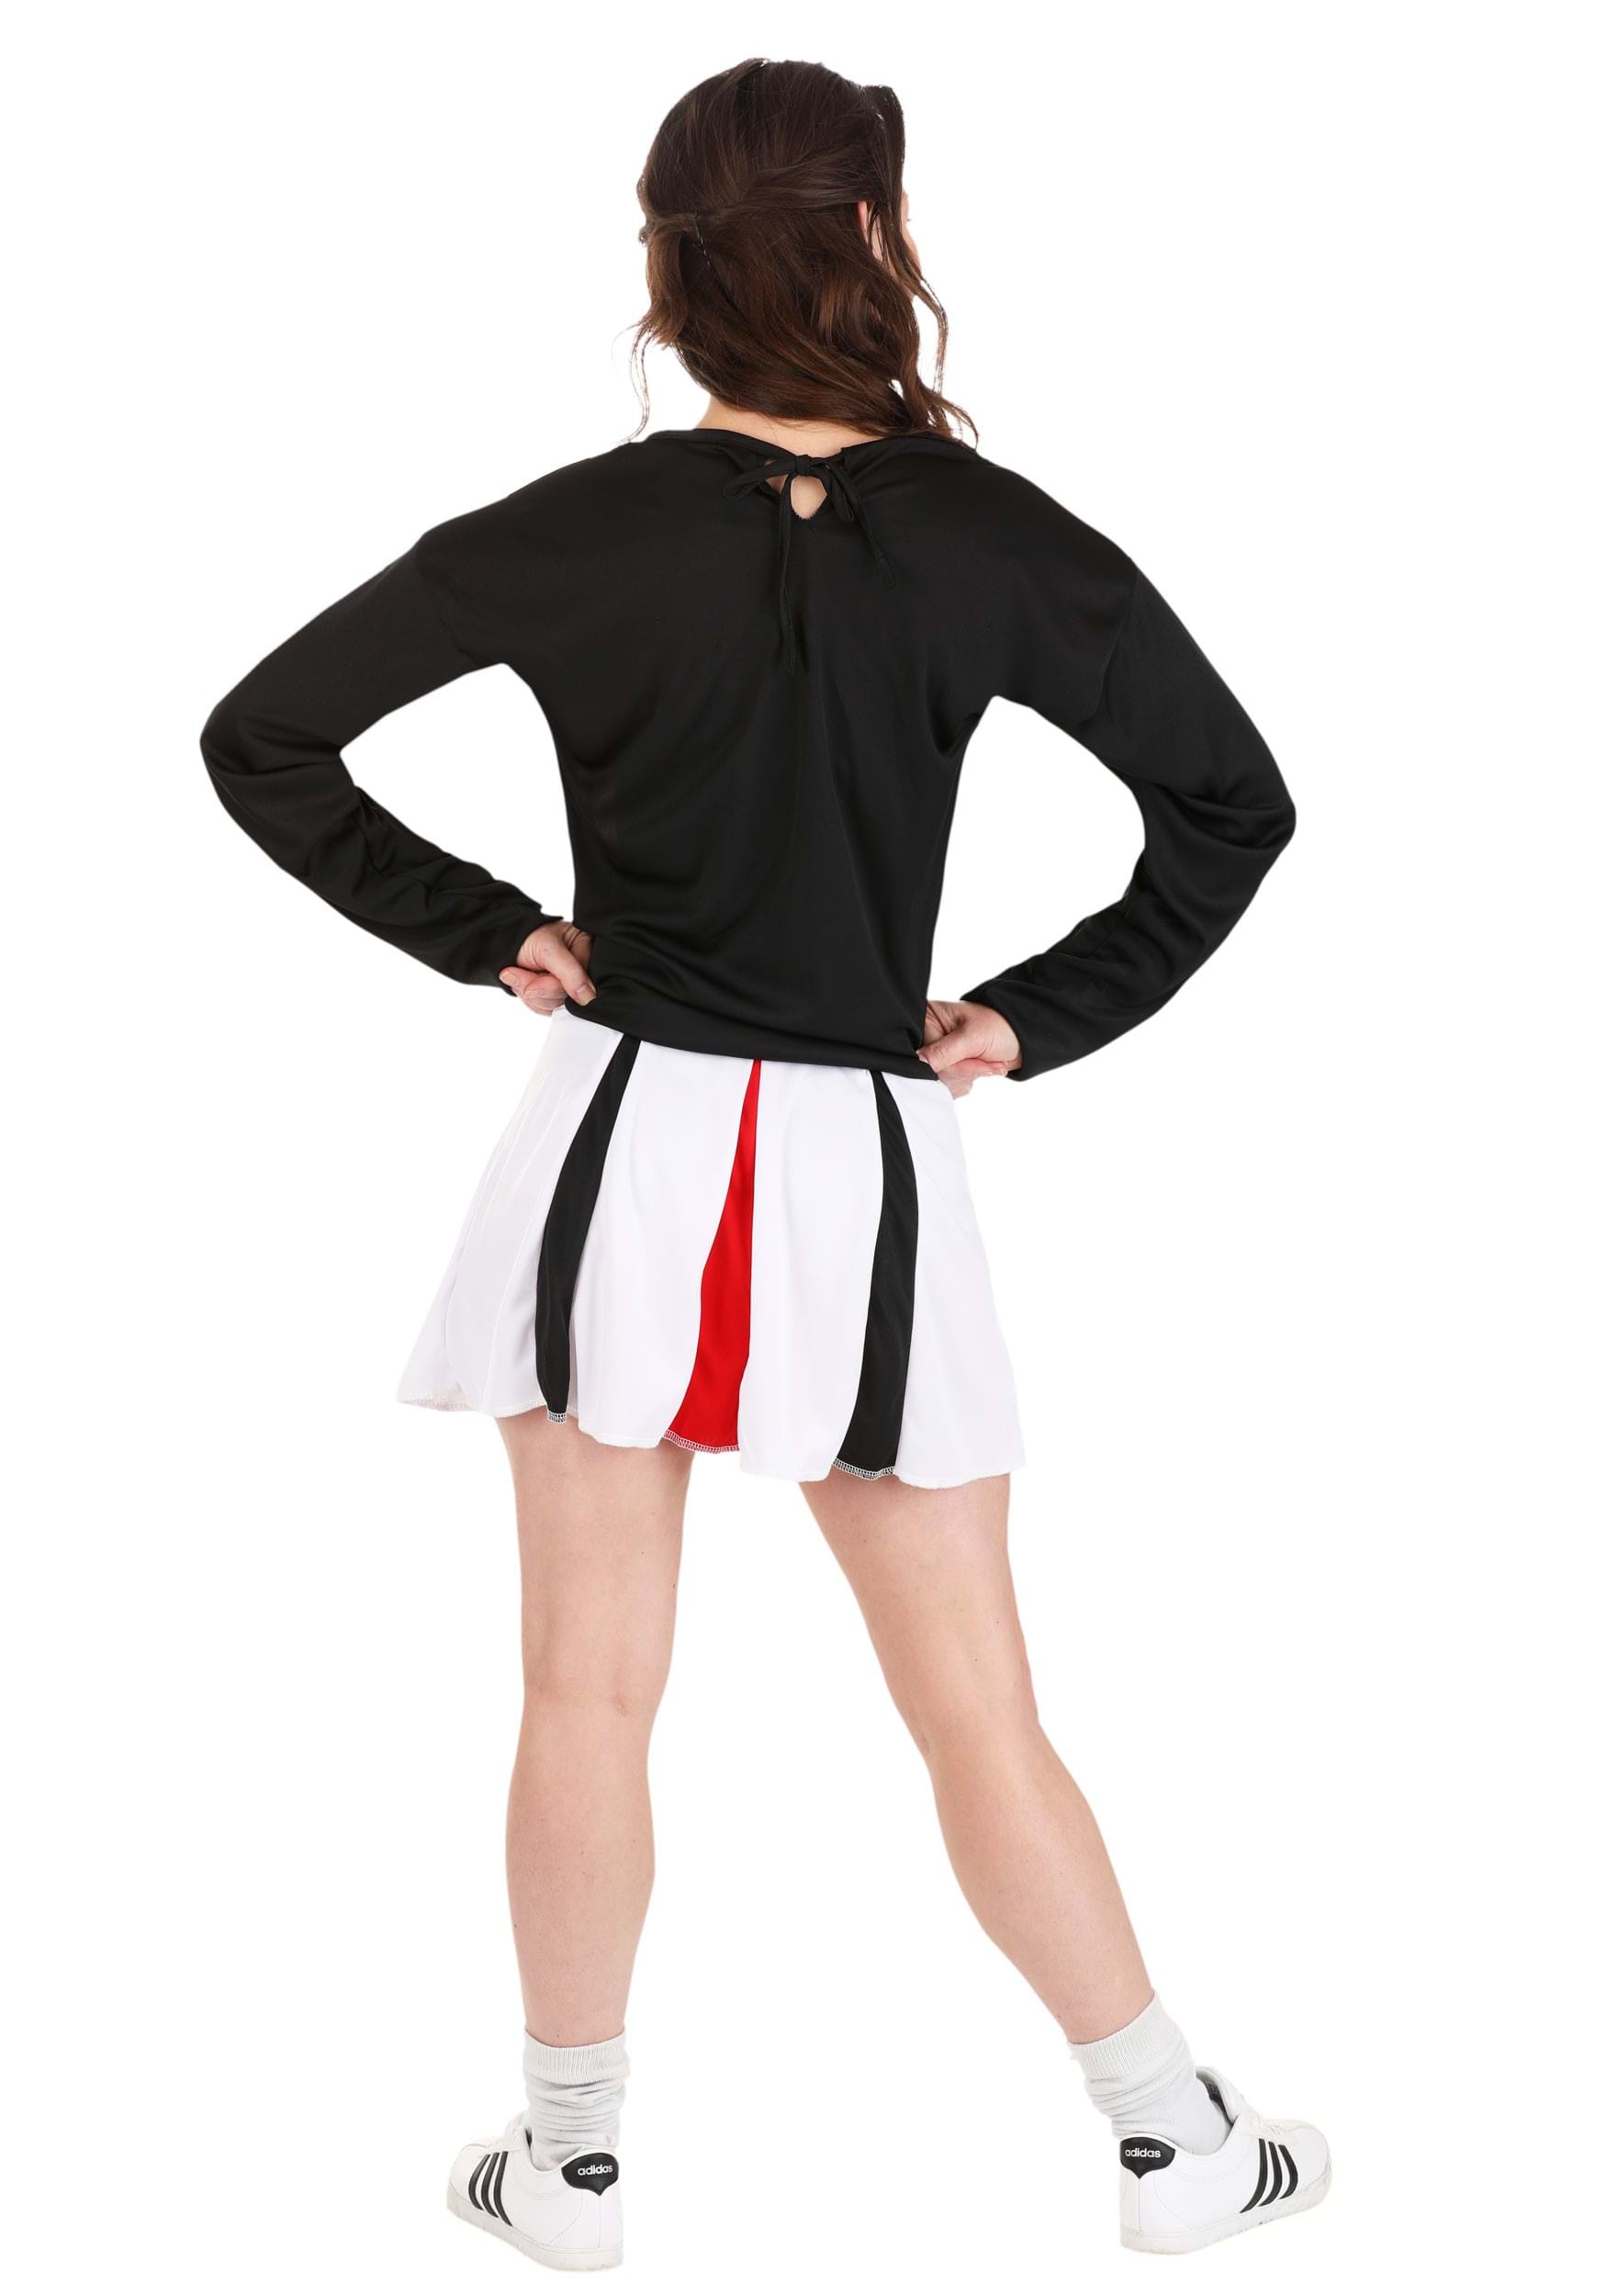 Women's Saturday Night Live Spartan Female Cheerleader Fancy Dress Costume